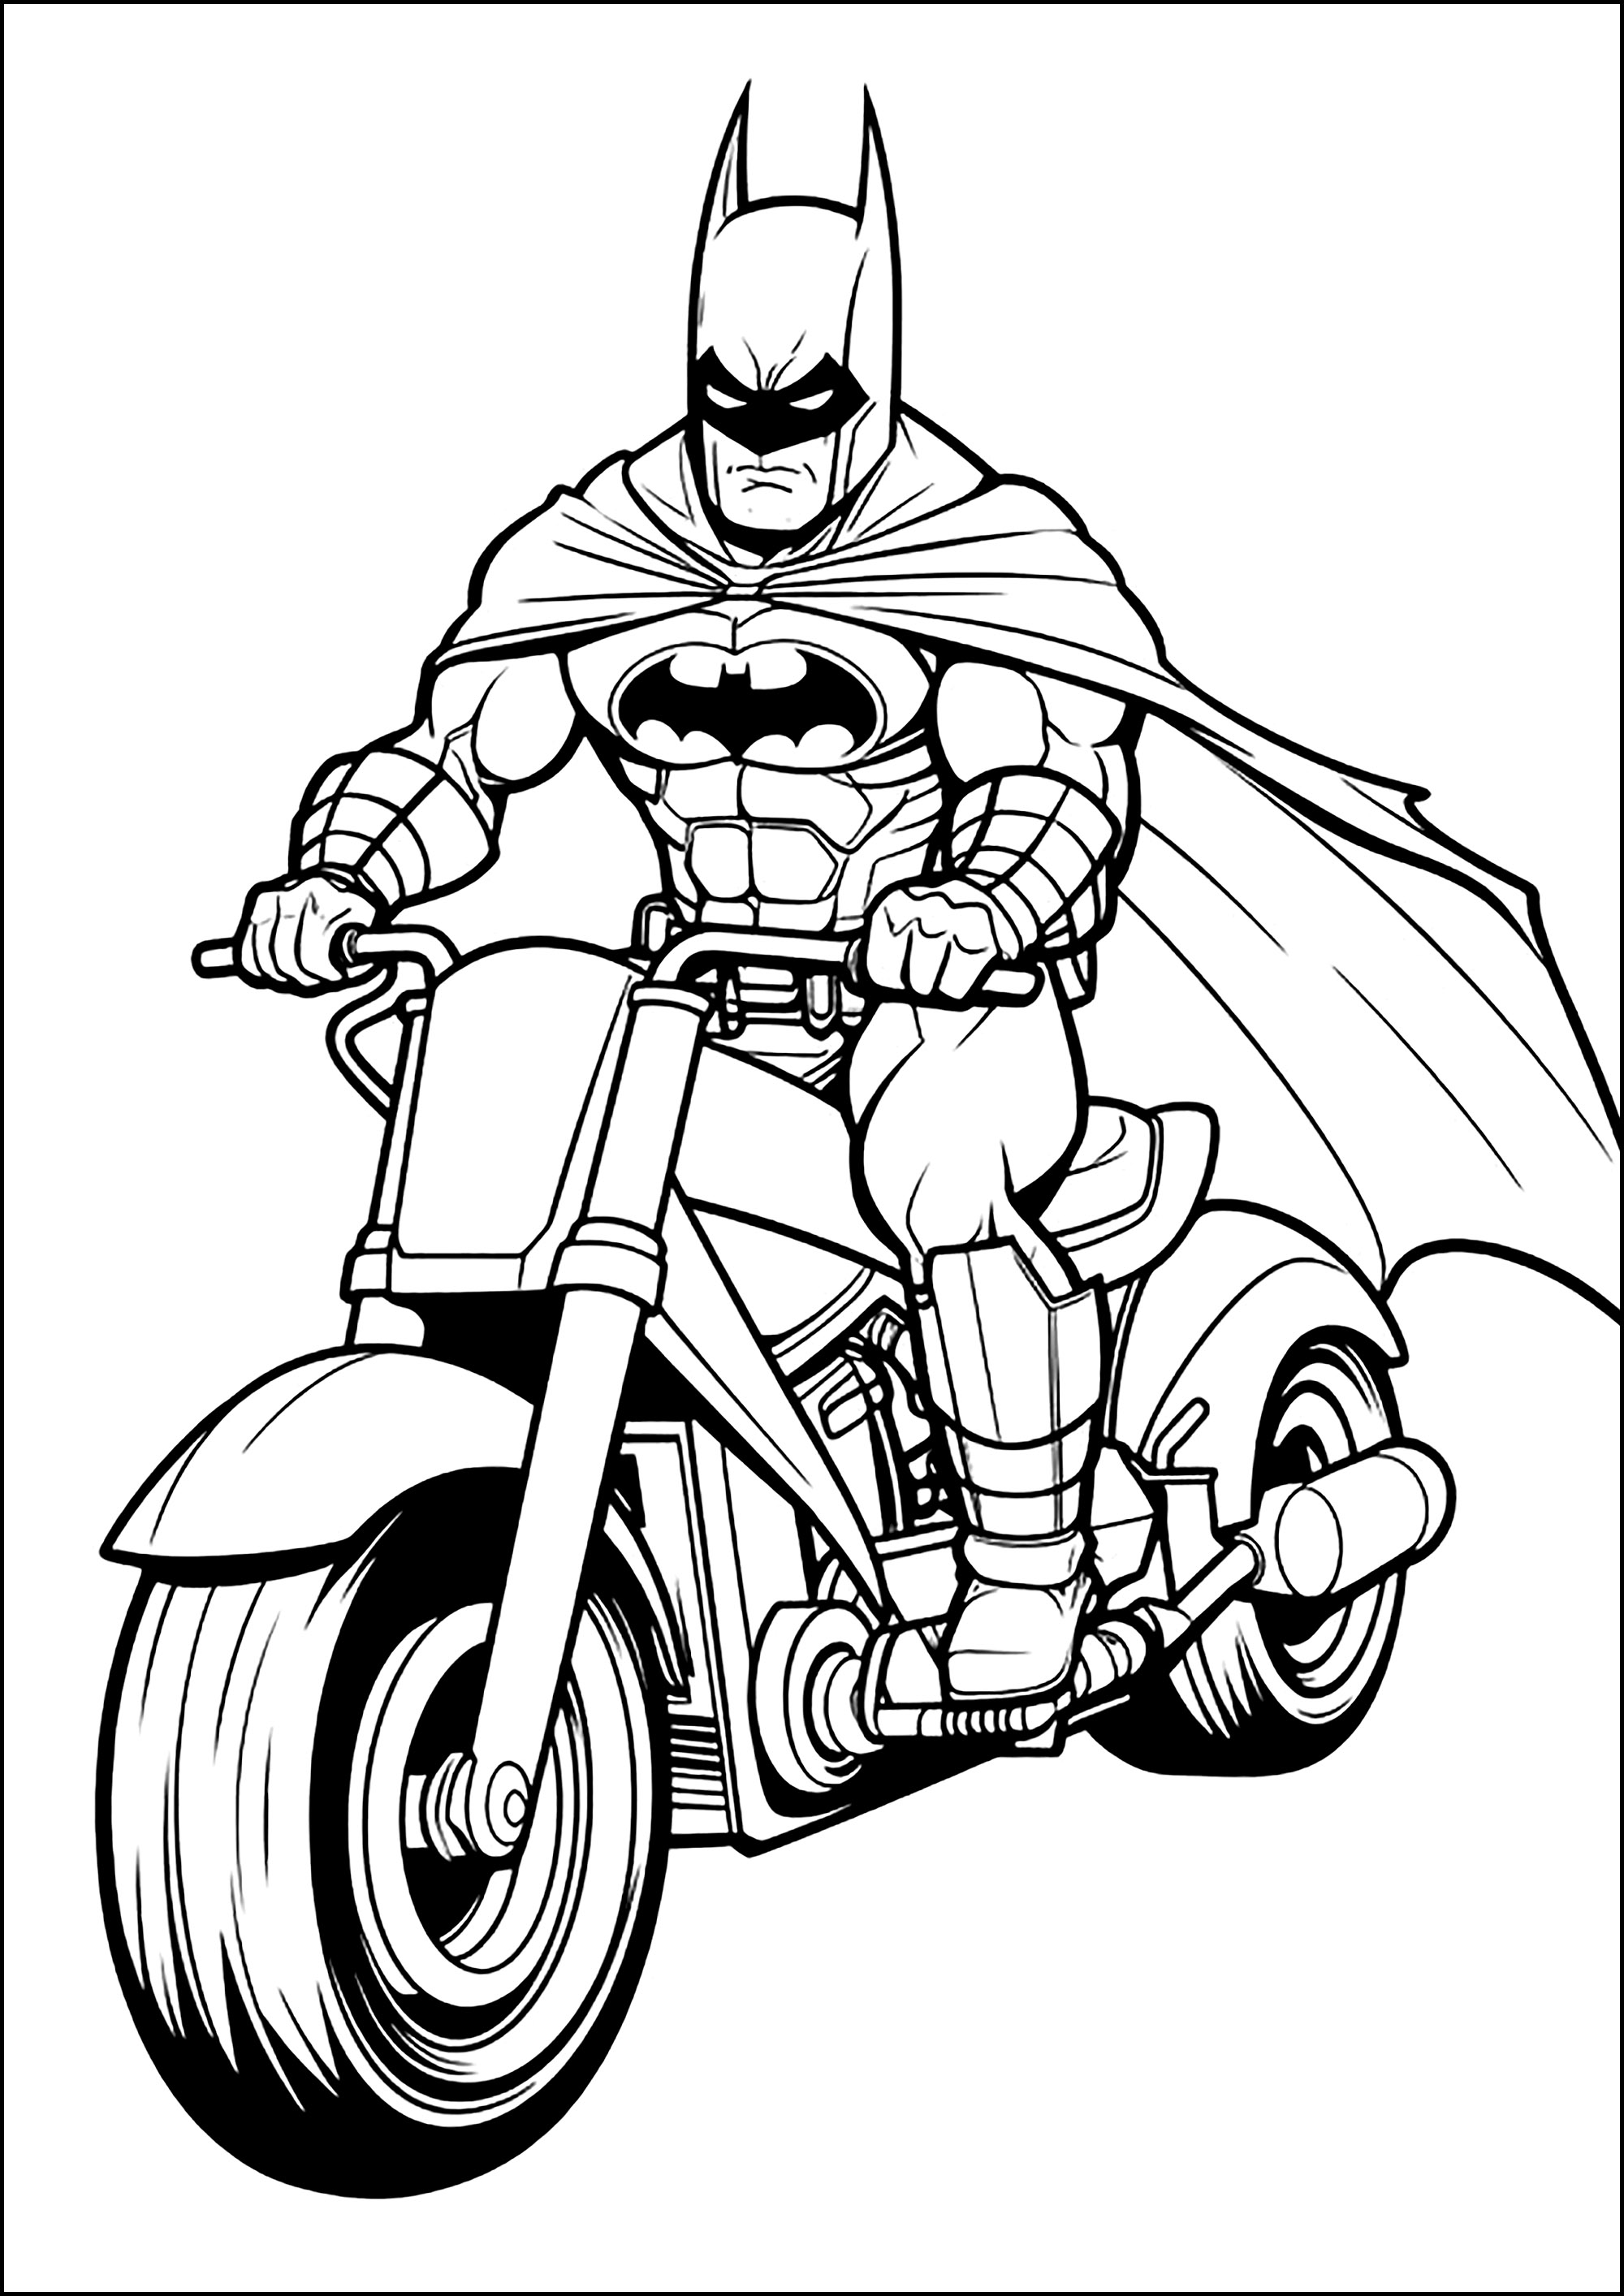 Batman on his motorcycle